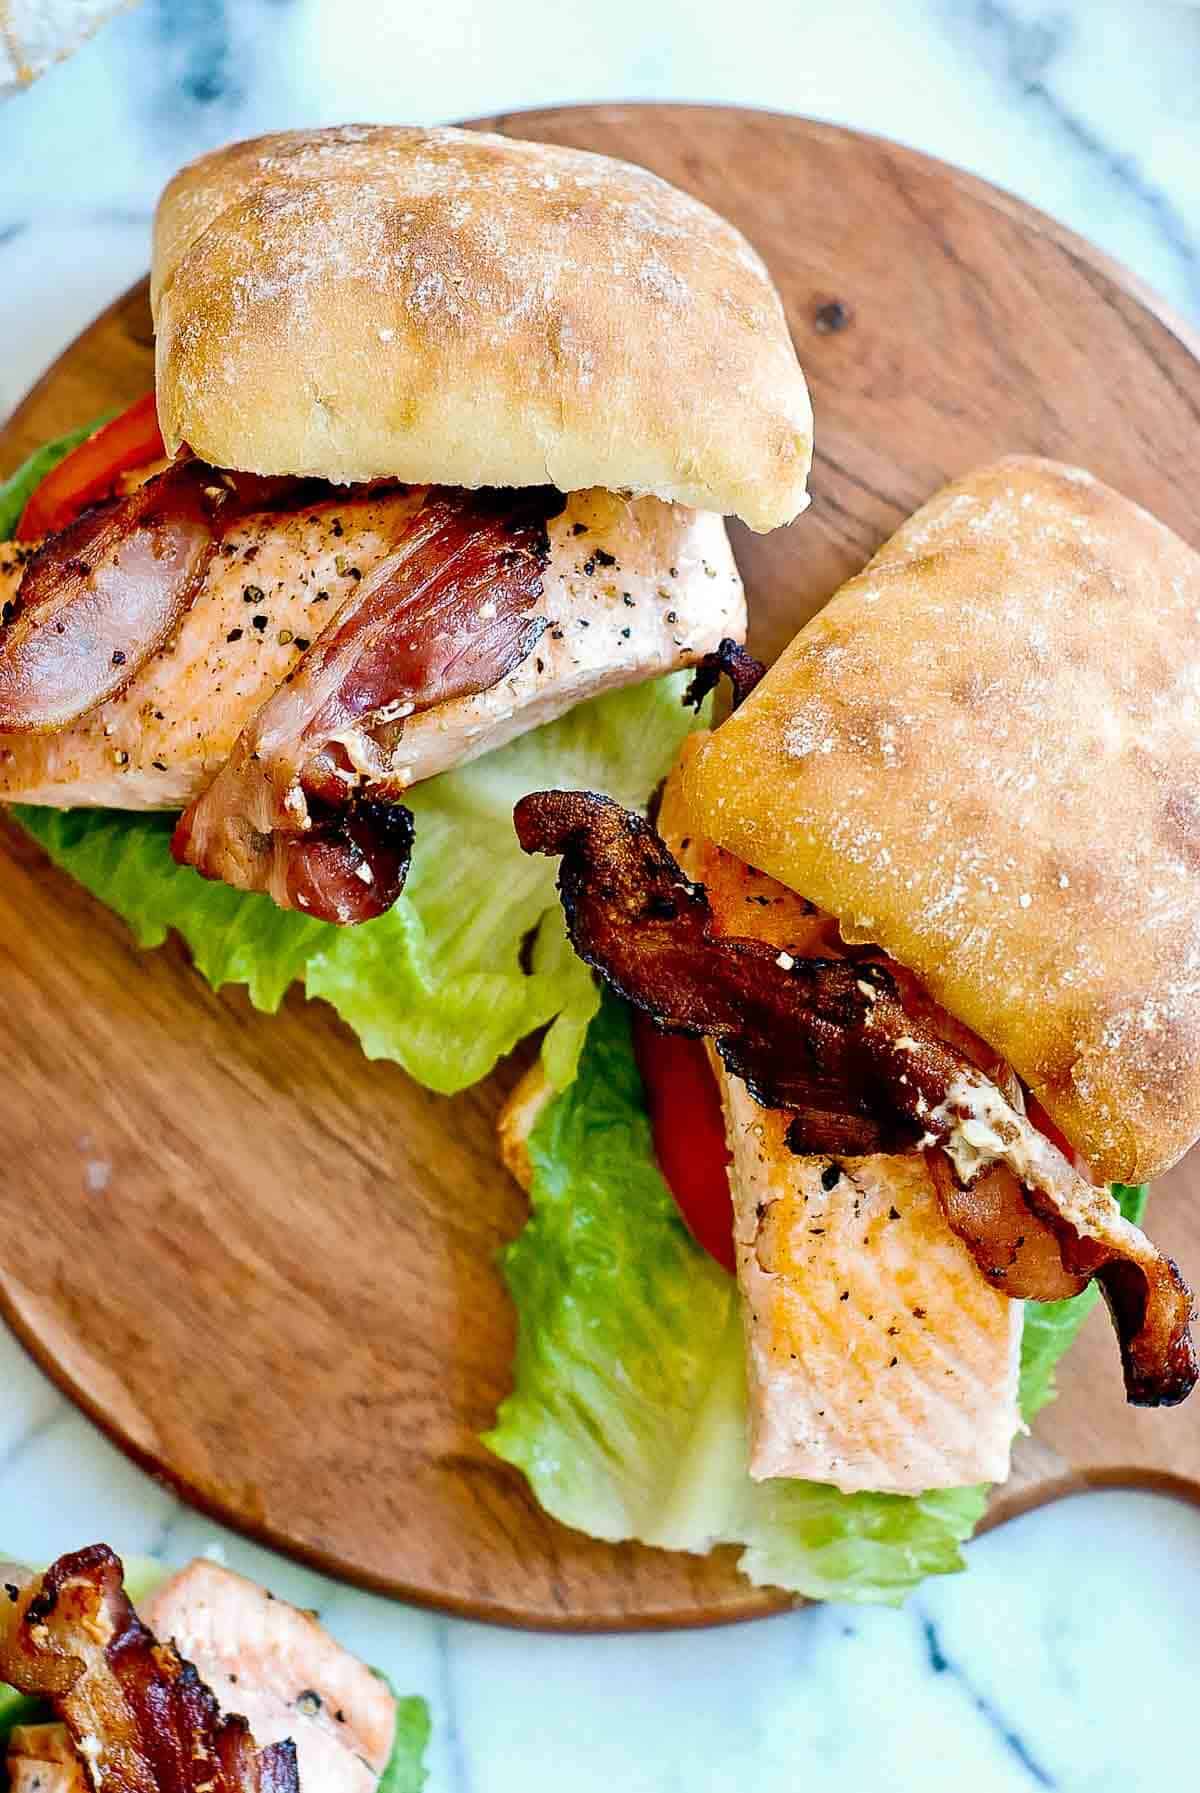 salmon blt sandwiches on ciabatta buns.